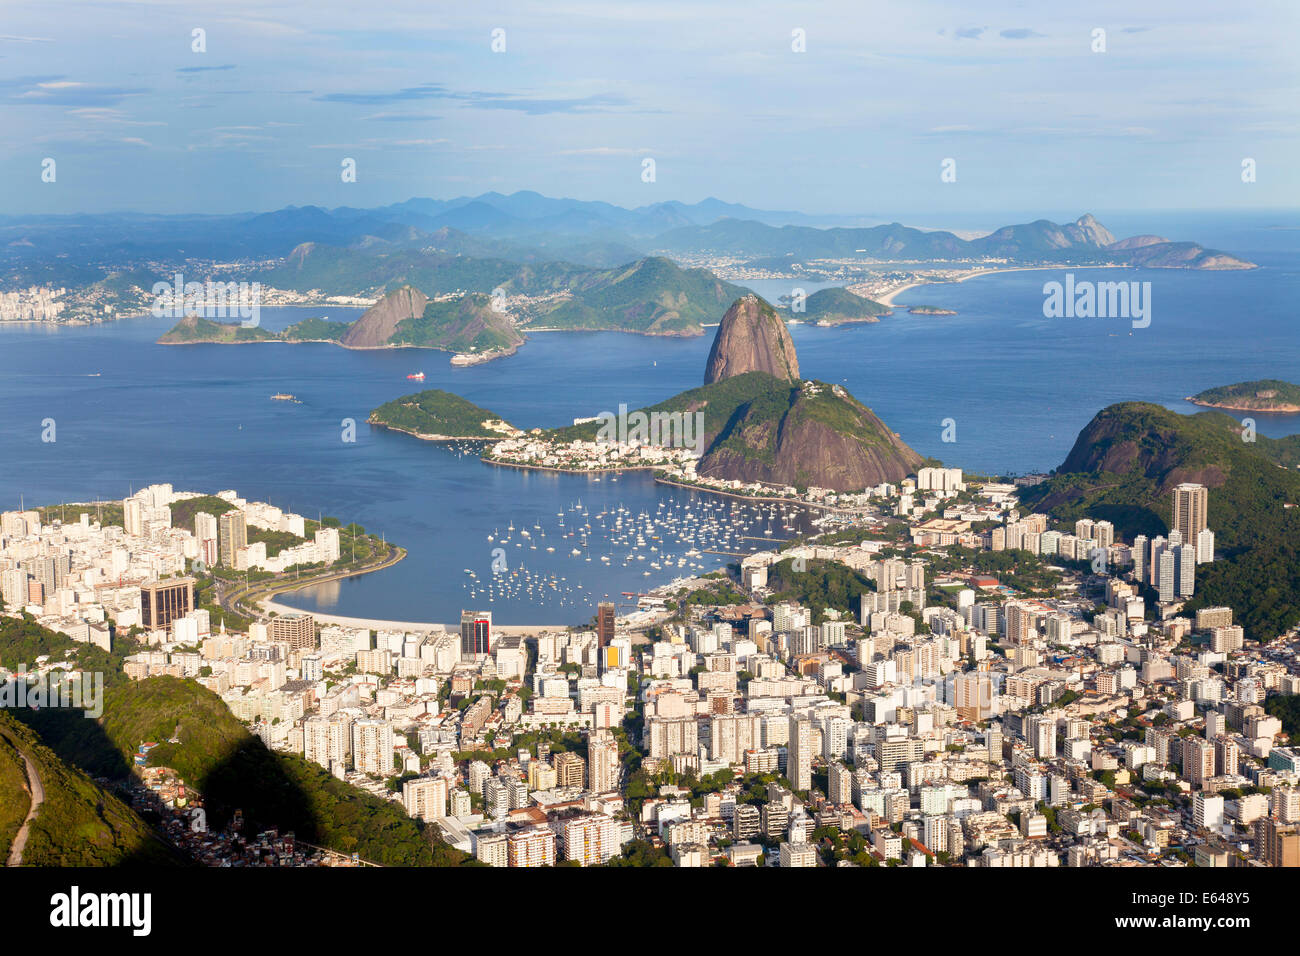 View over Sugarloaf mountain in Guanabara Bay, Rio de Janeiro Stock Photo